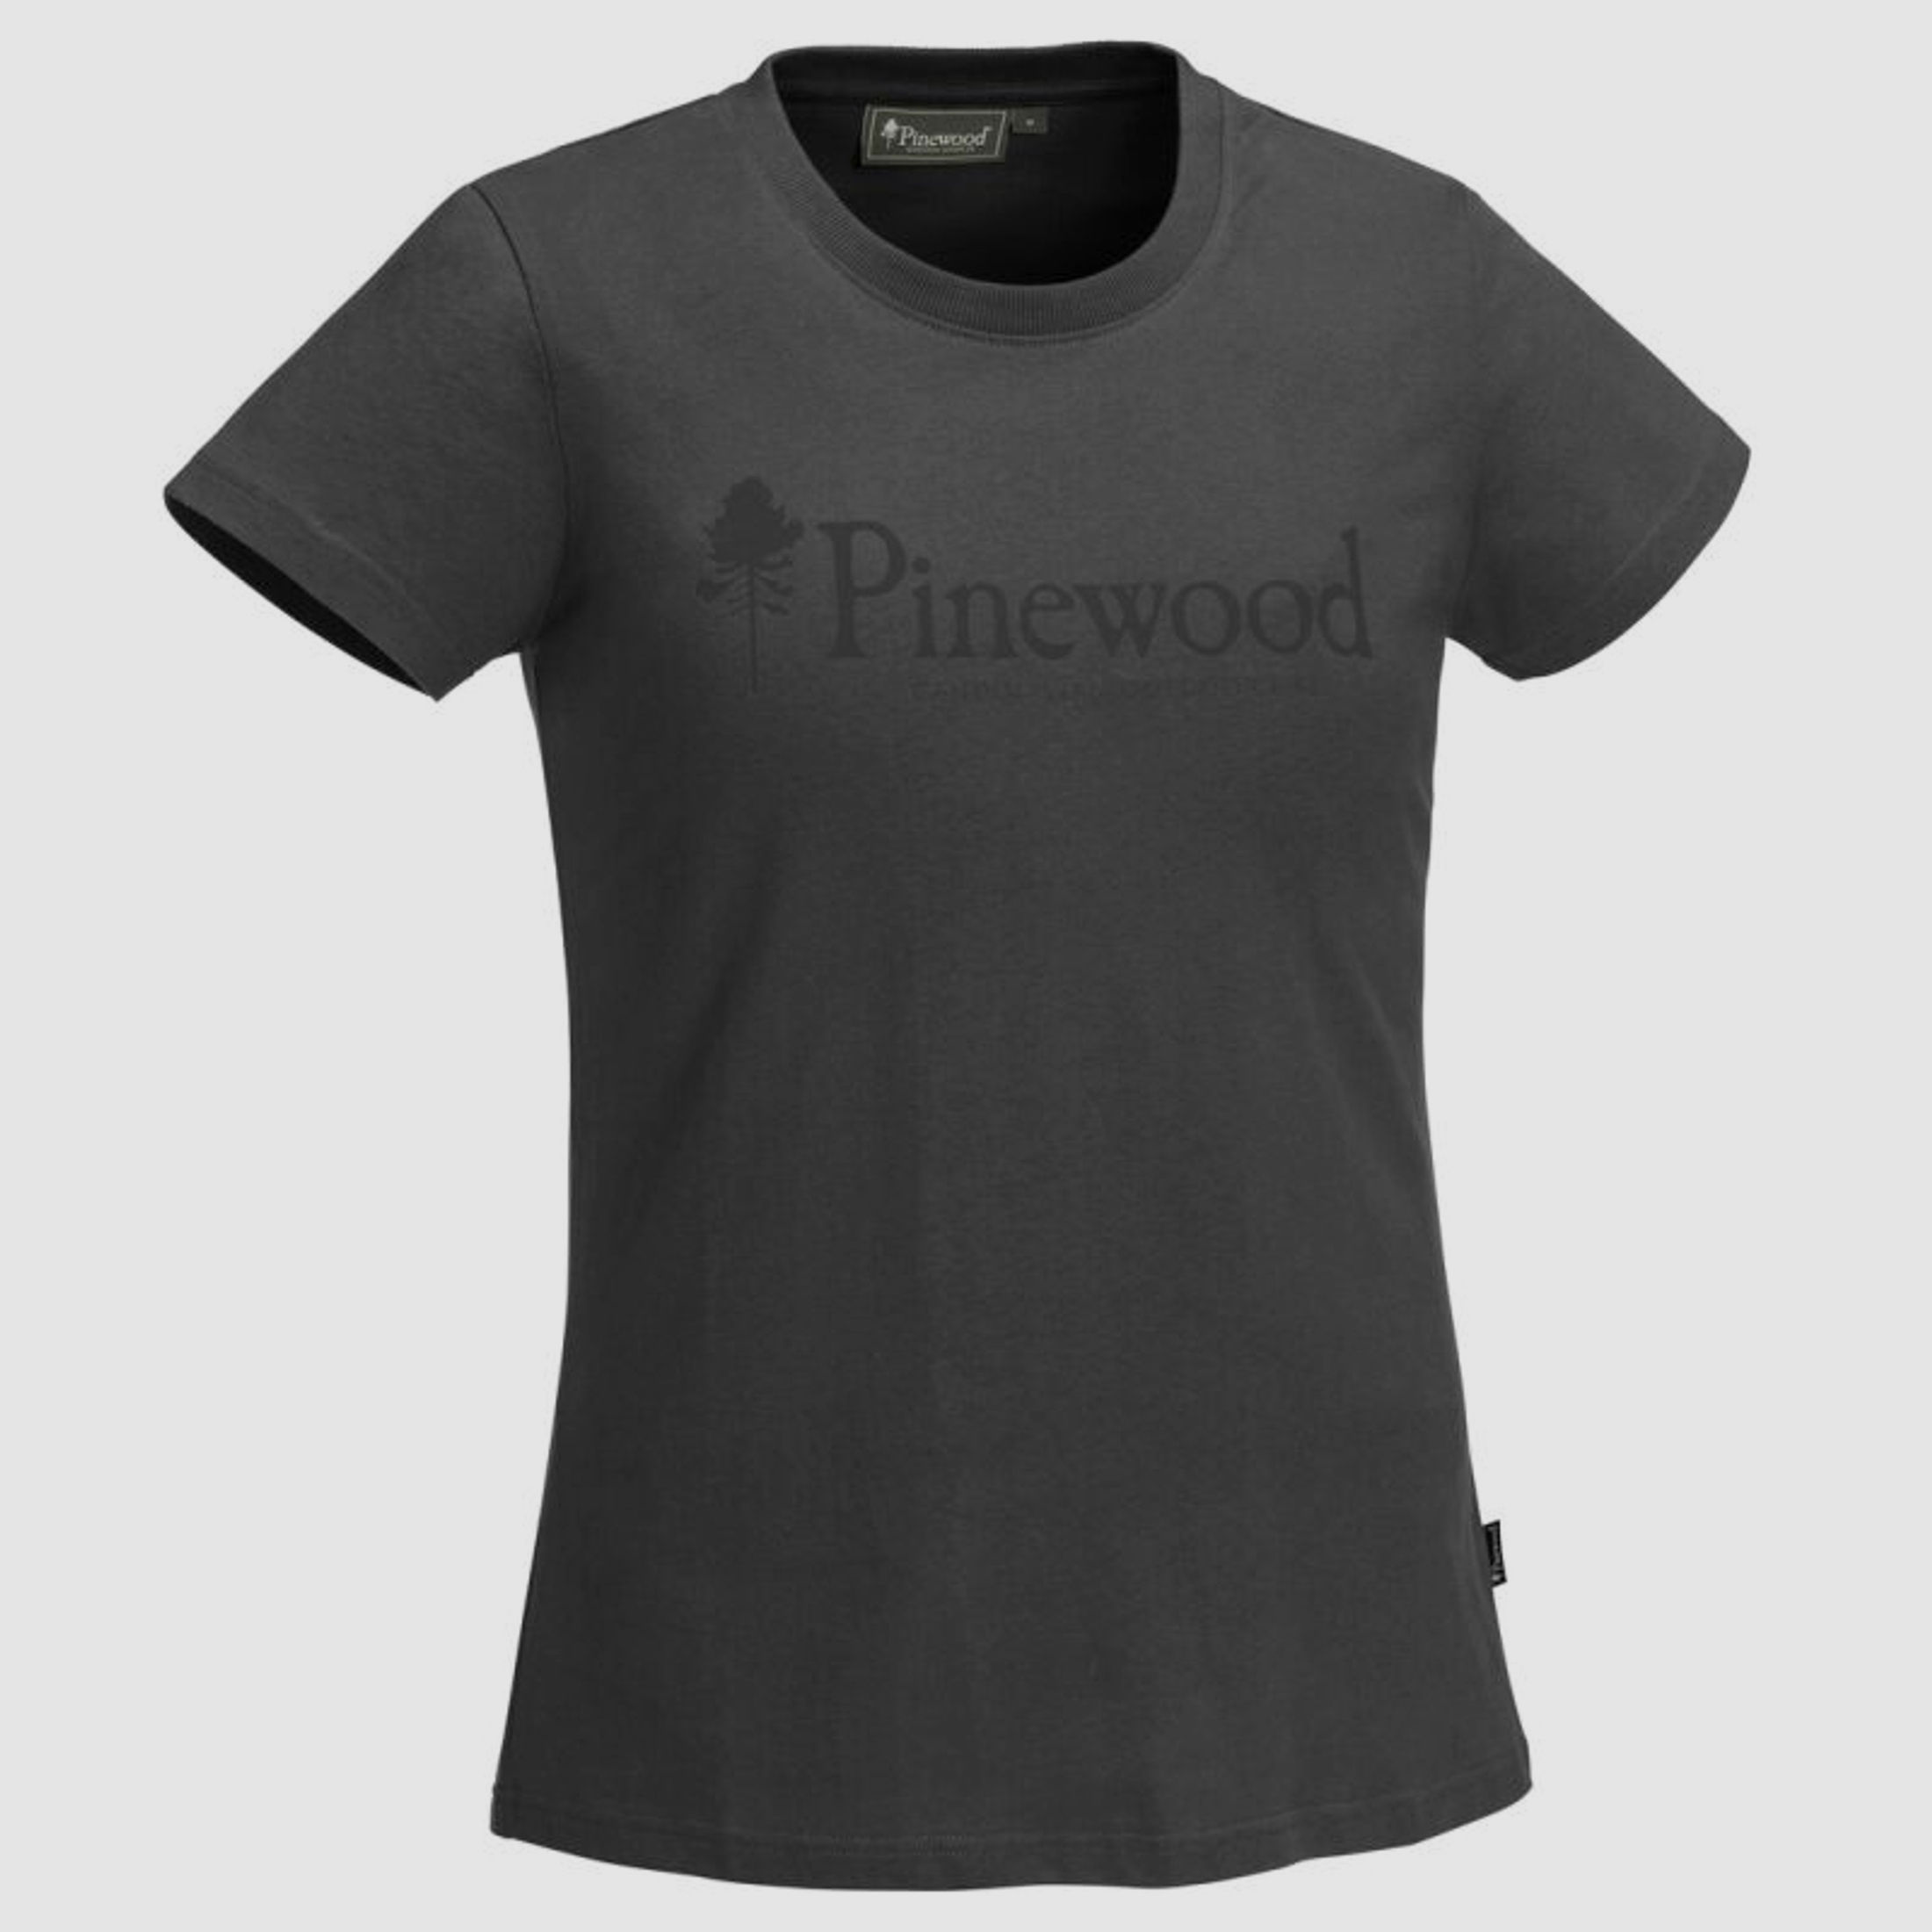 Pinewood Damen T-Shirt Outdoor Life Dunkel Anthrazit